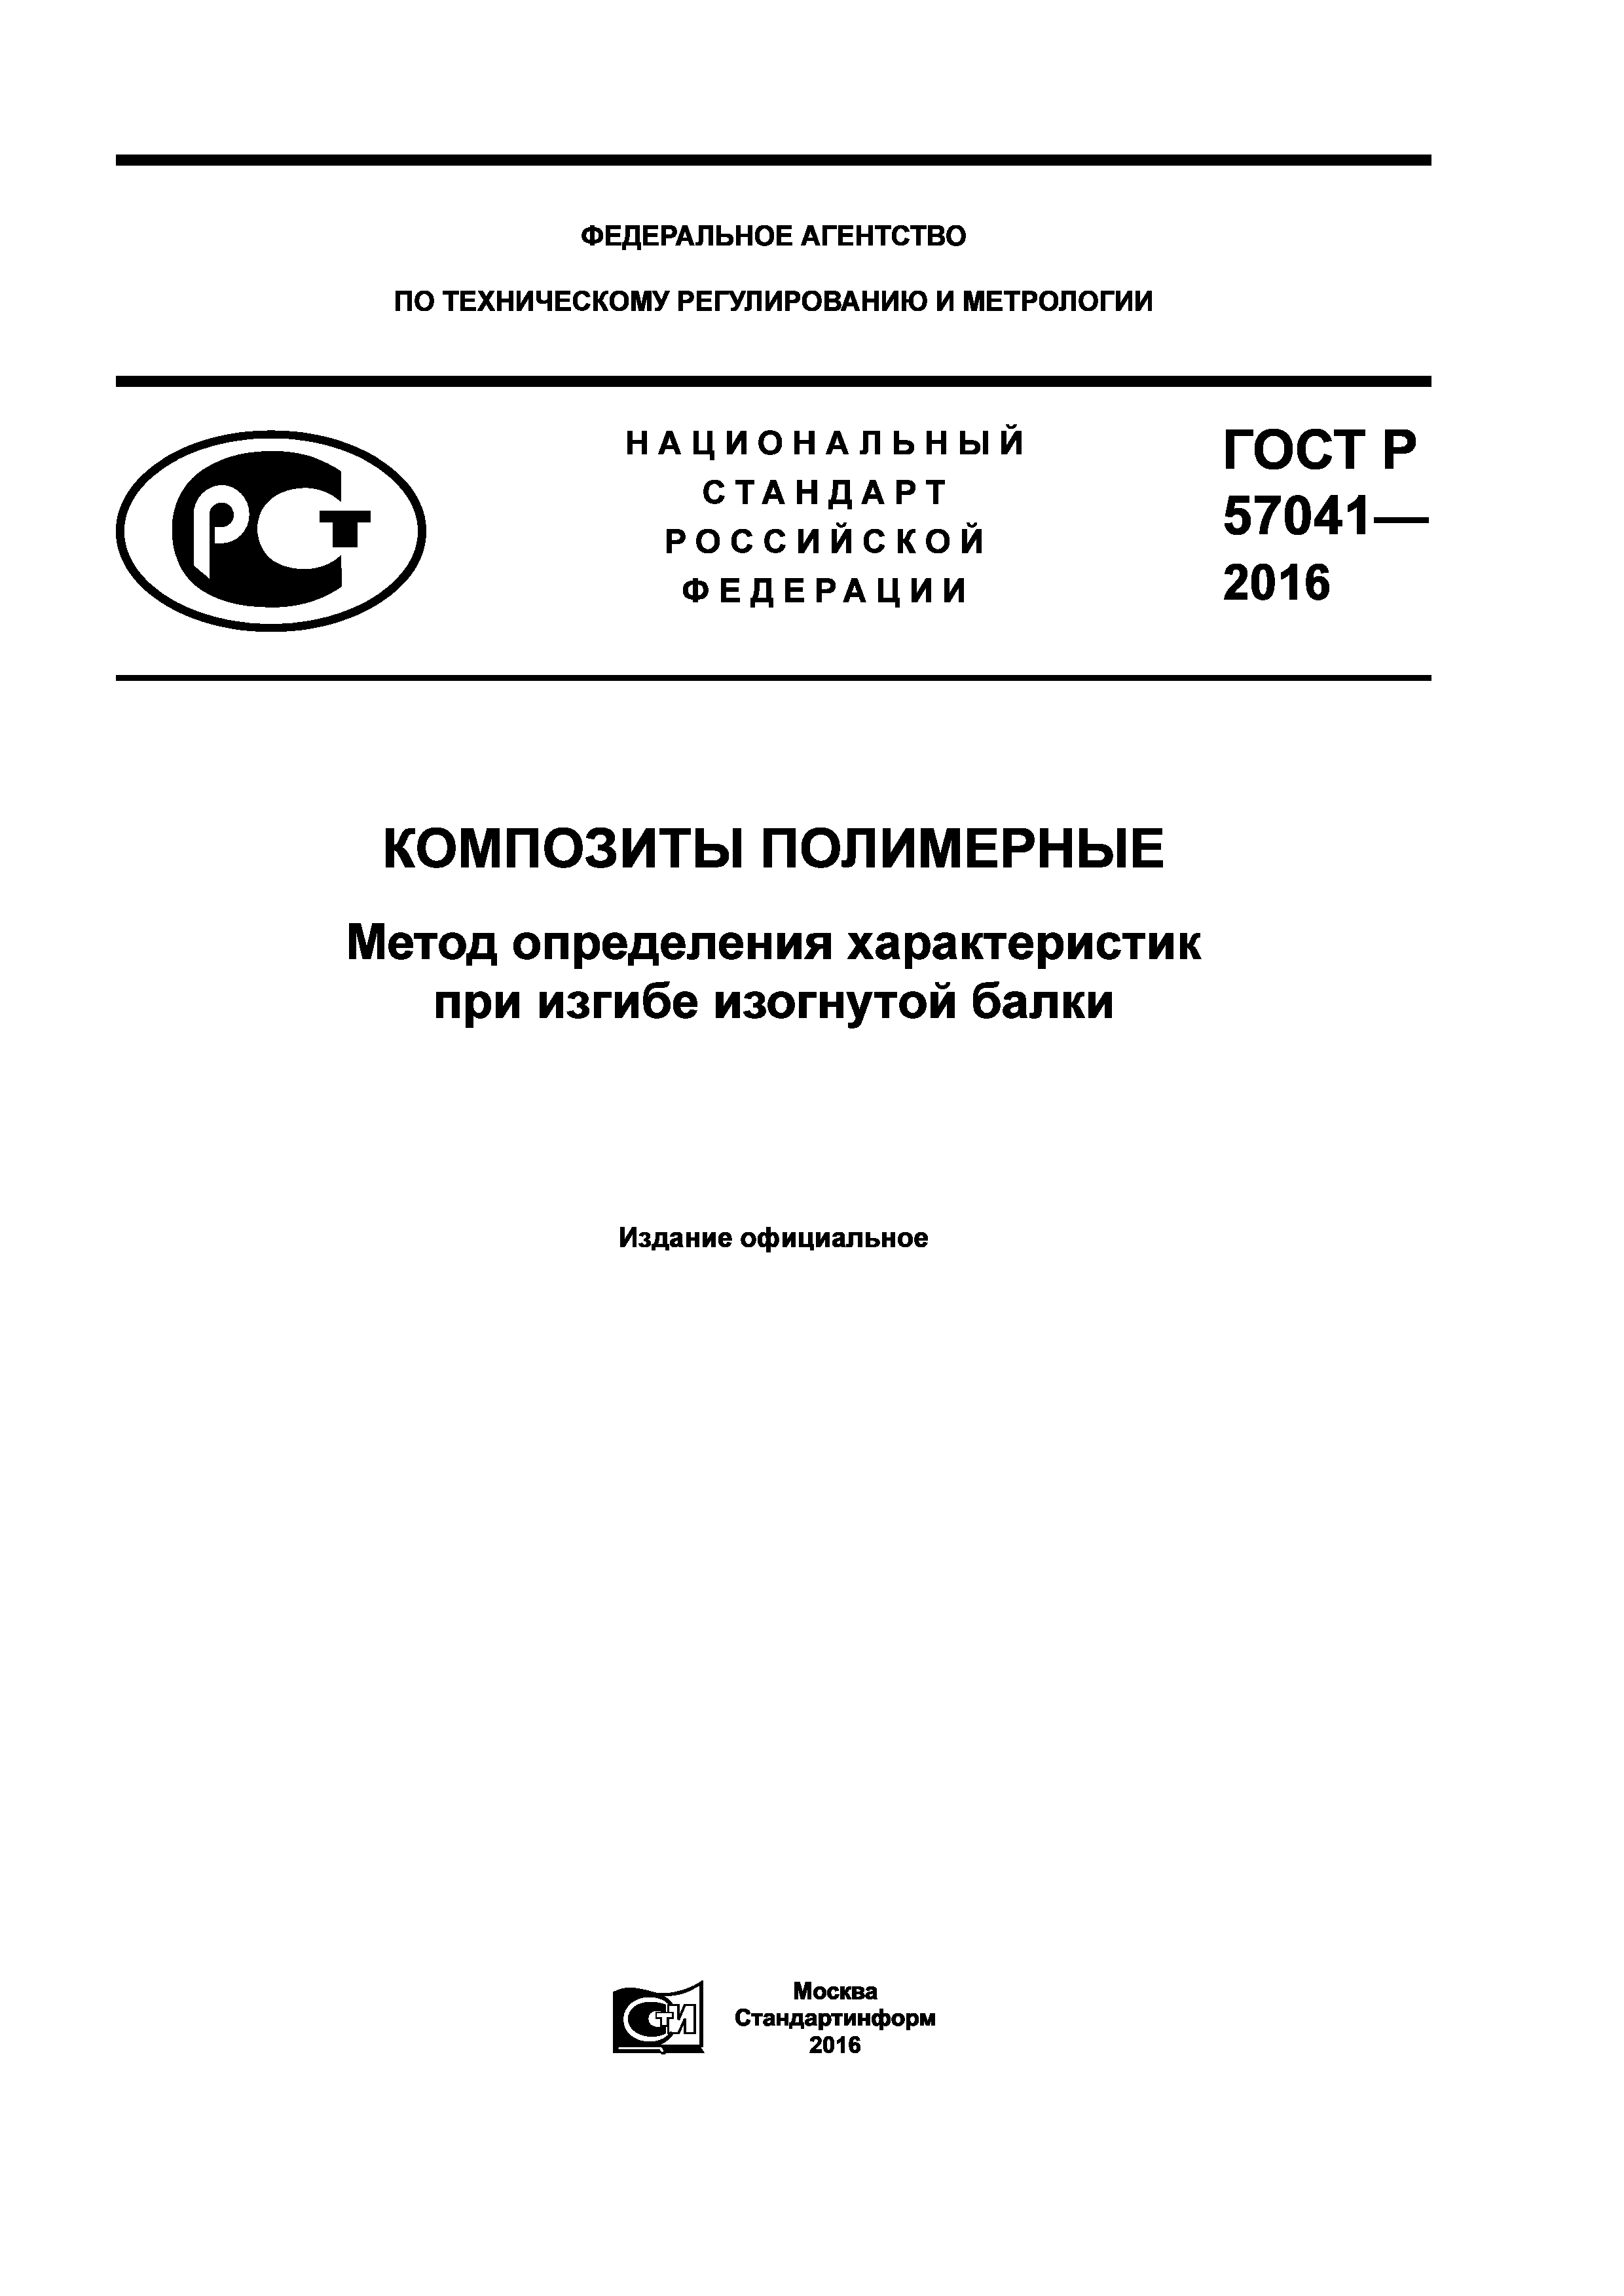 ГОСТ Р 57041-2016